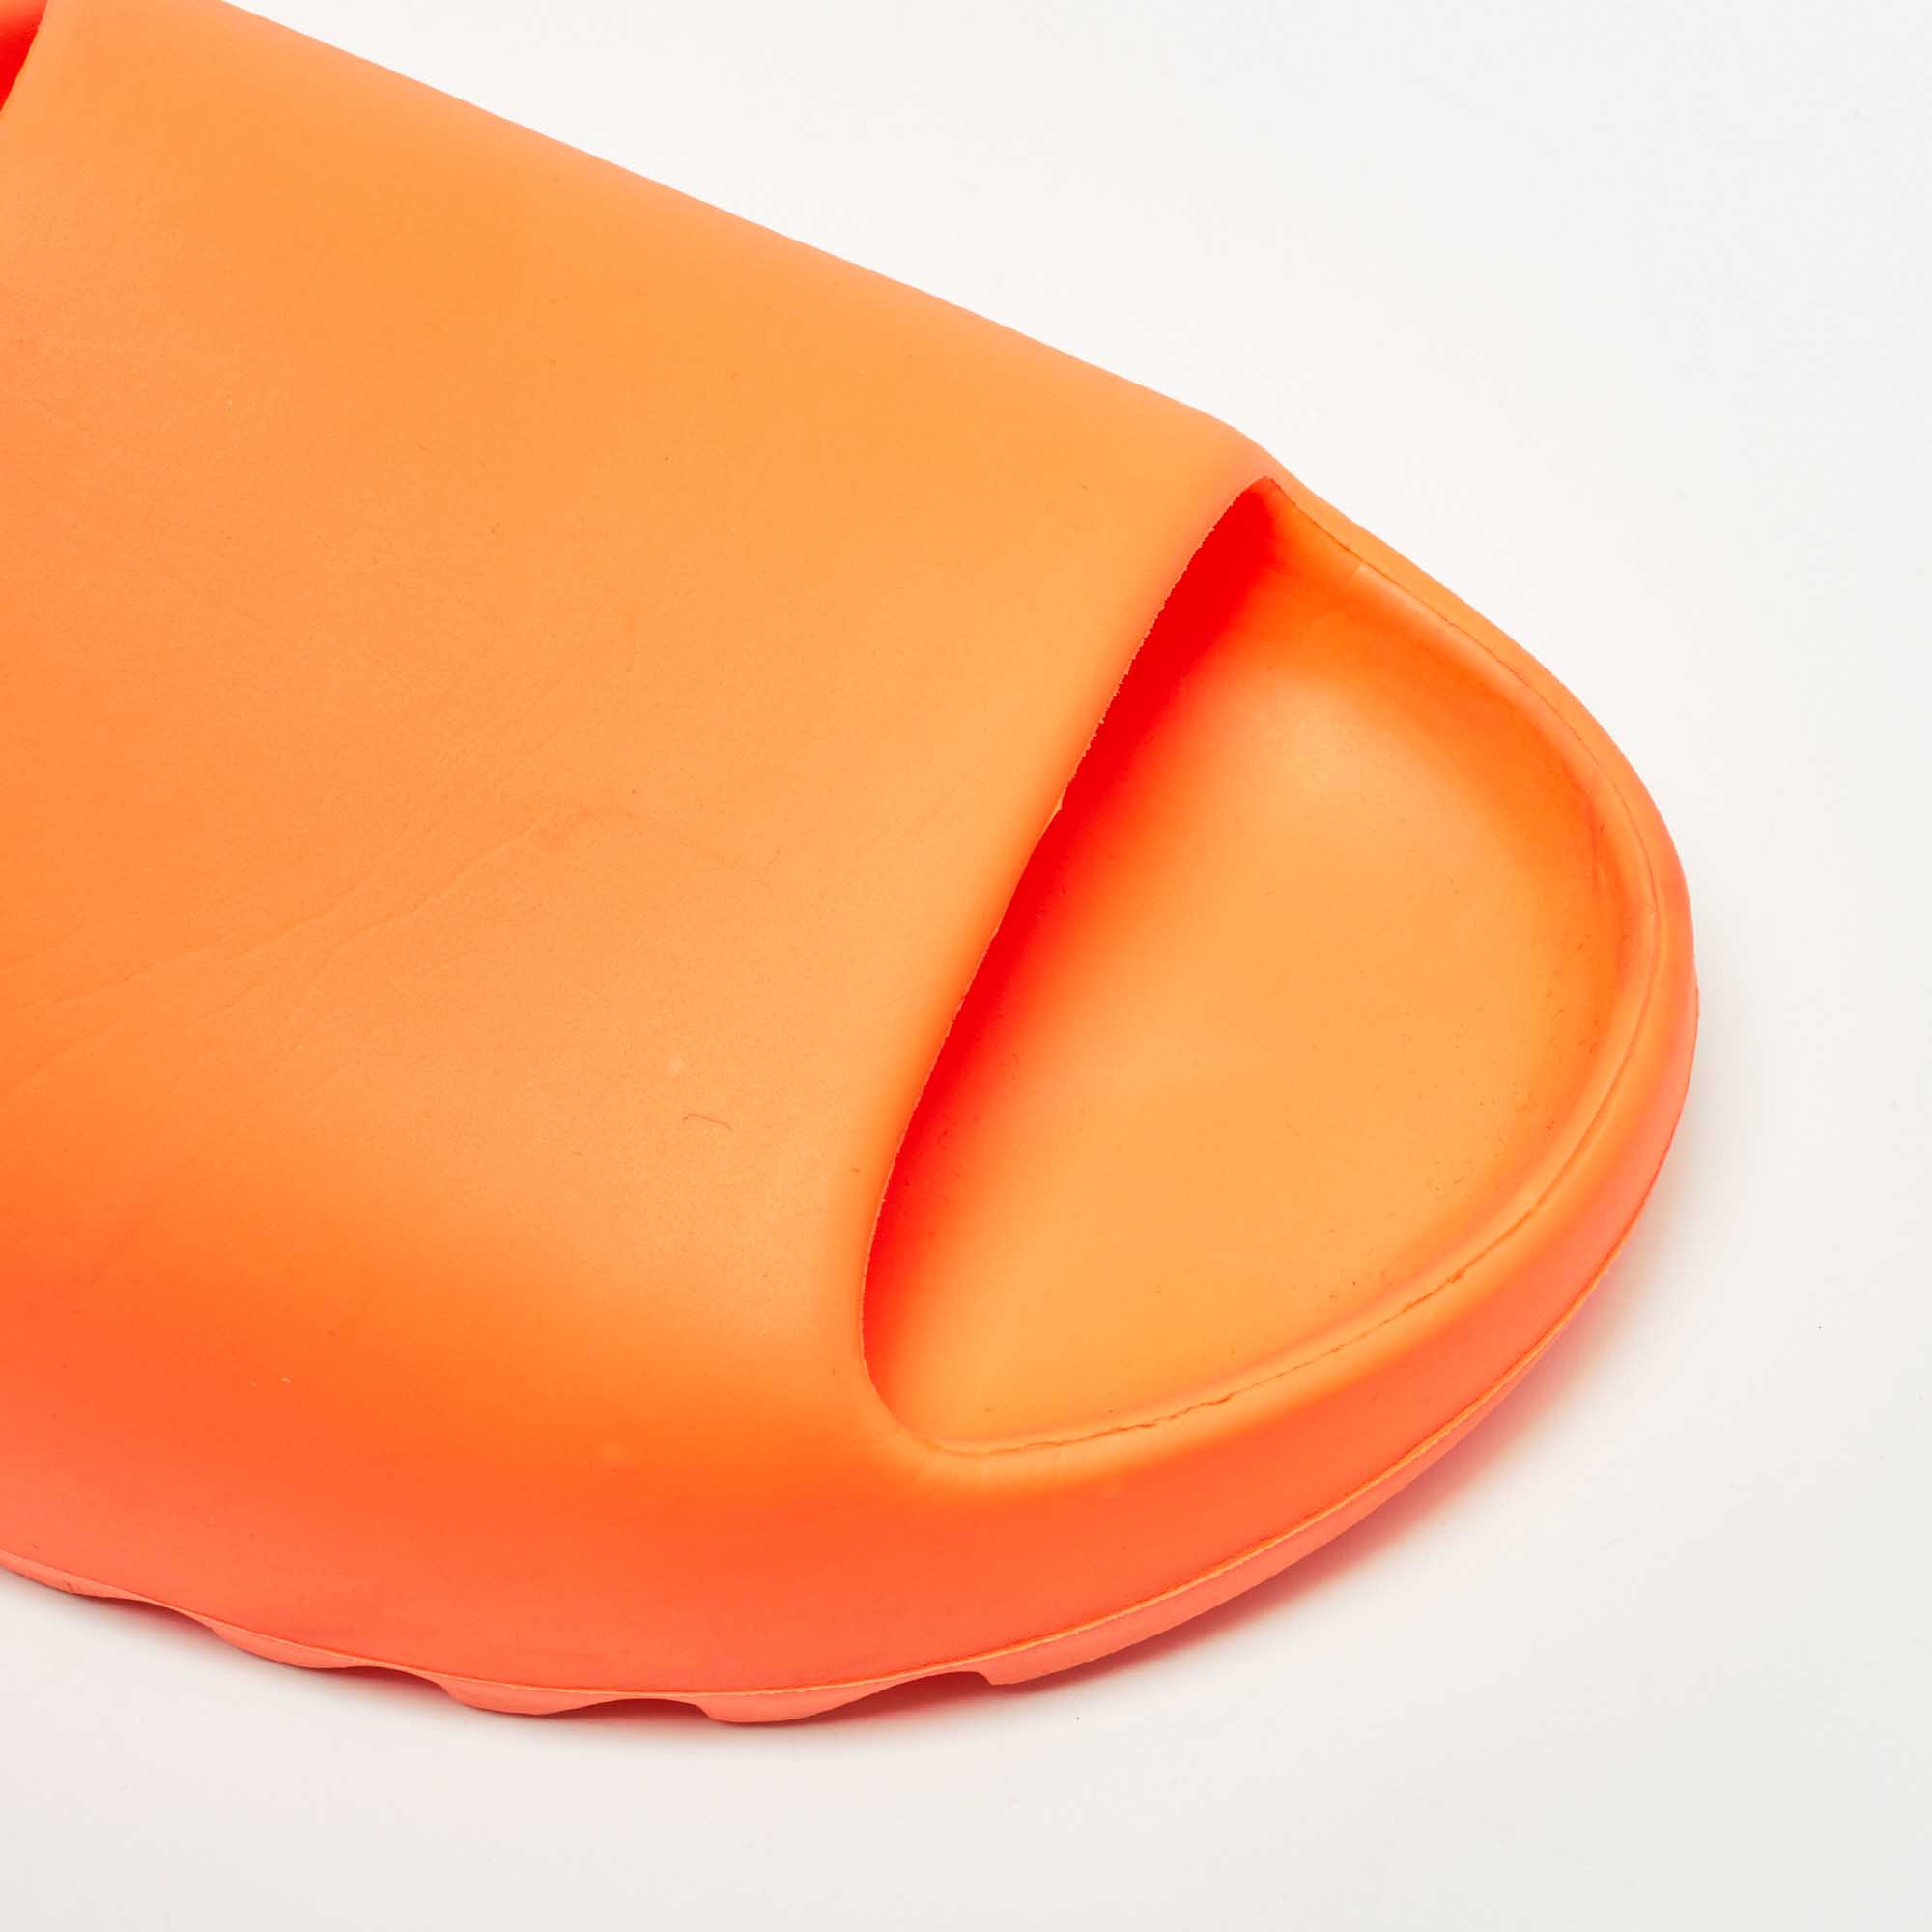 Yeezy X Adidas Orange Rubber Enflame Slides Size 45 1/3